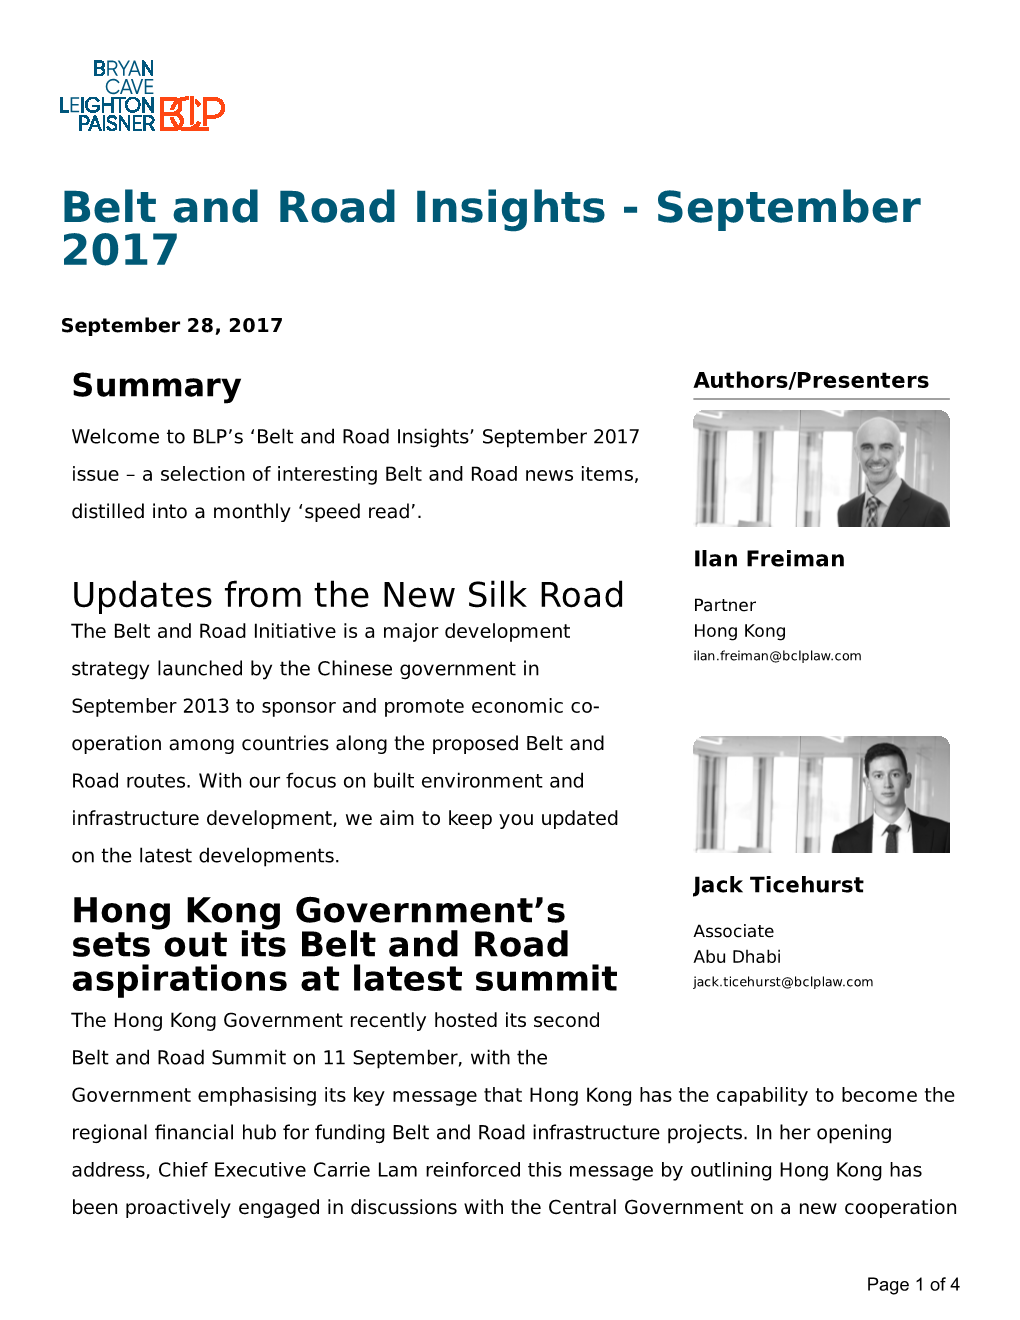 Belt and Road Insights - September 2017